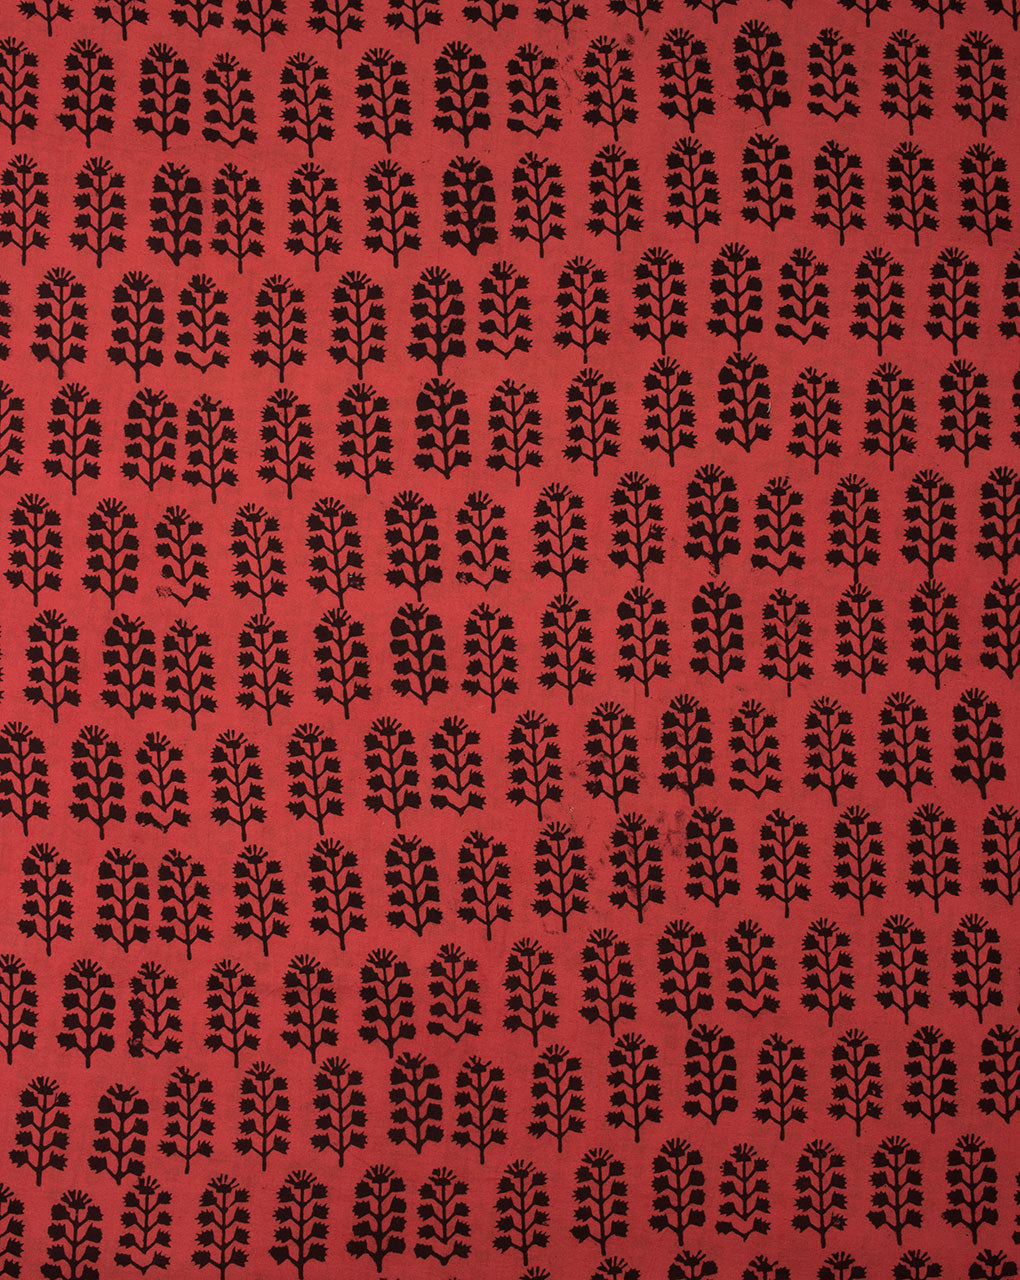 Hand Block Bordered Bagh Print Cotton Fabric - Fabriclore.com